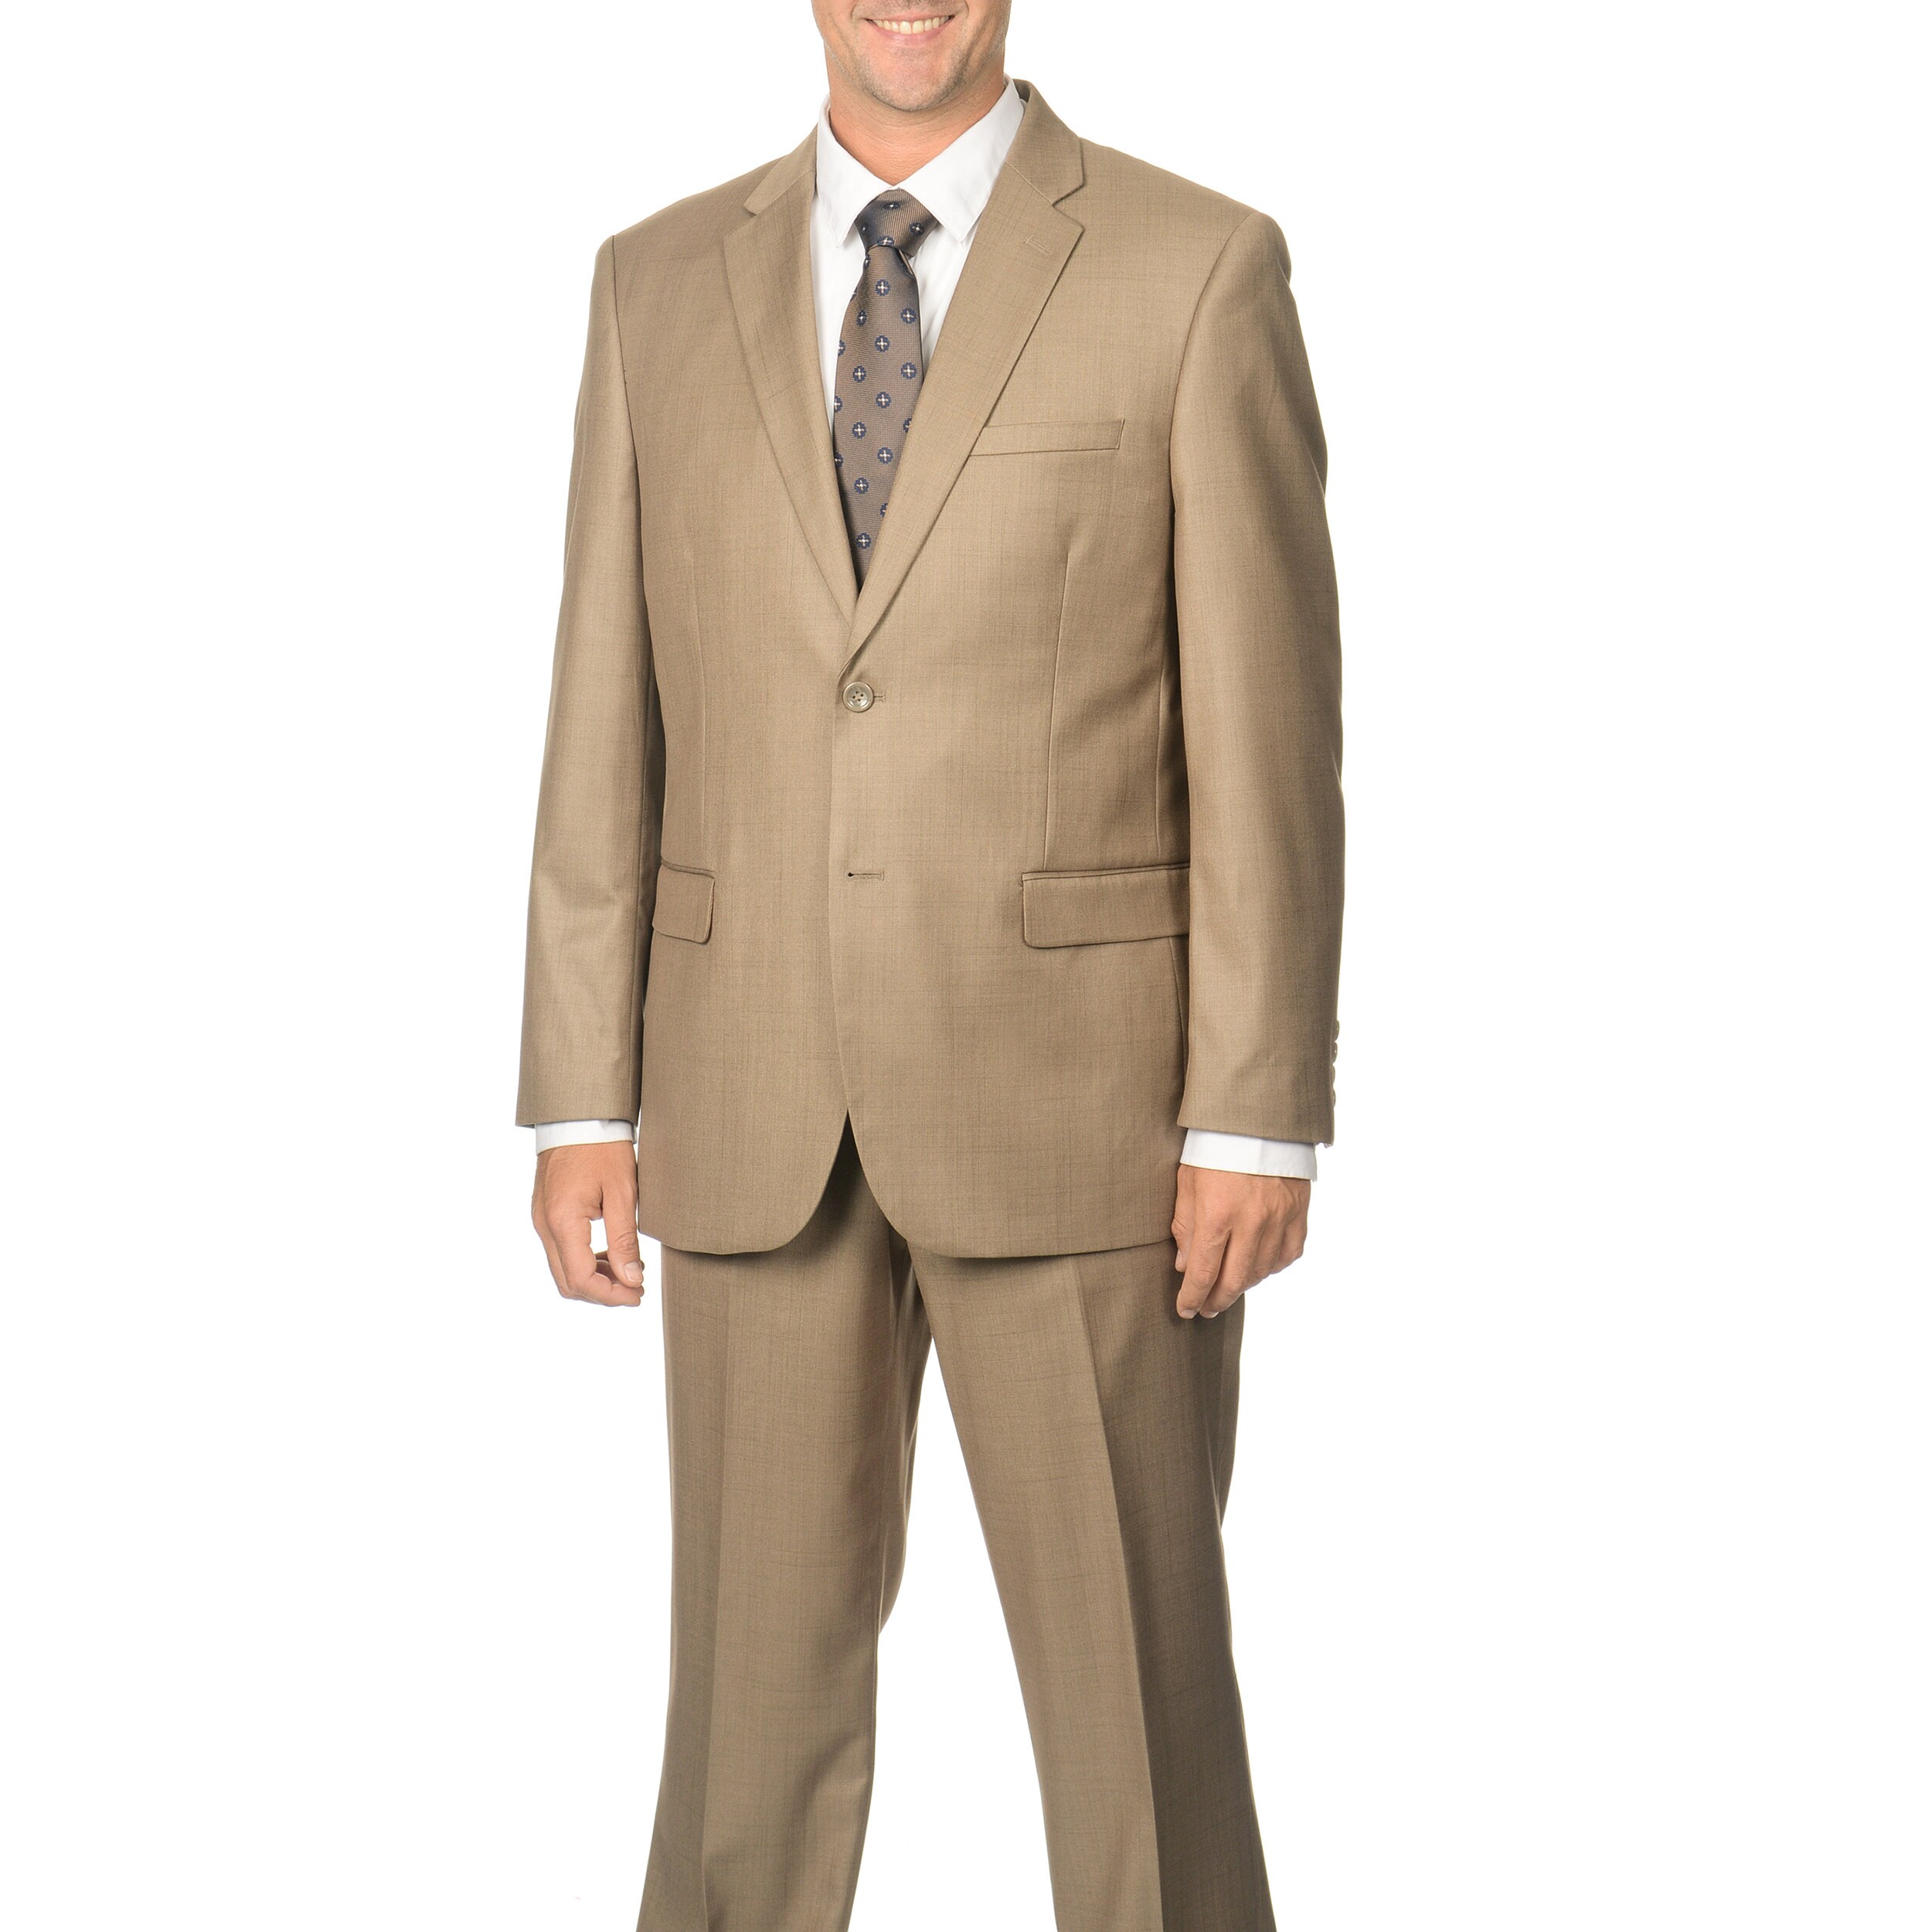 Caravelli Men's Tan Notch Collar 2-button Suit - Overstock Shopping ...